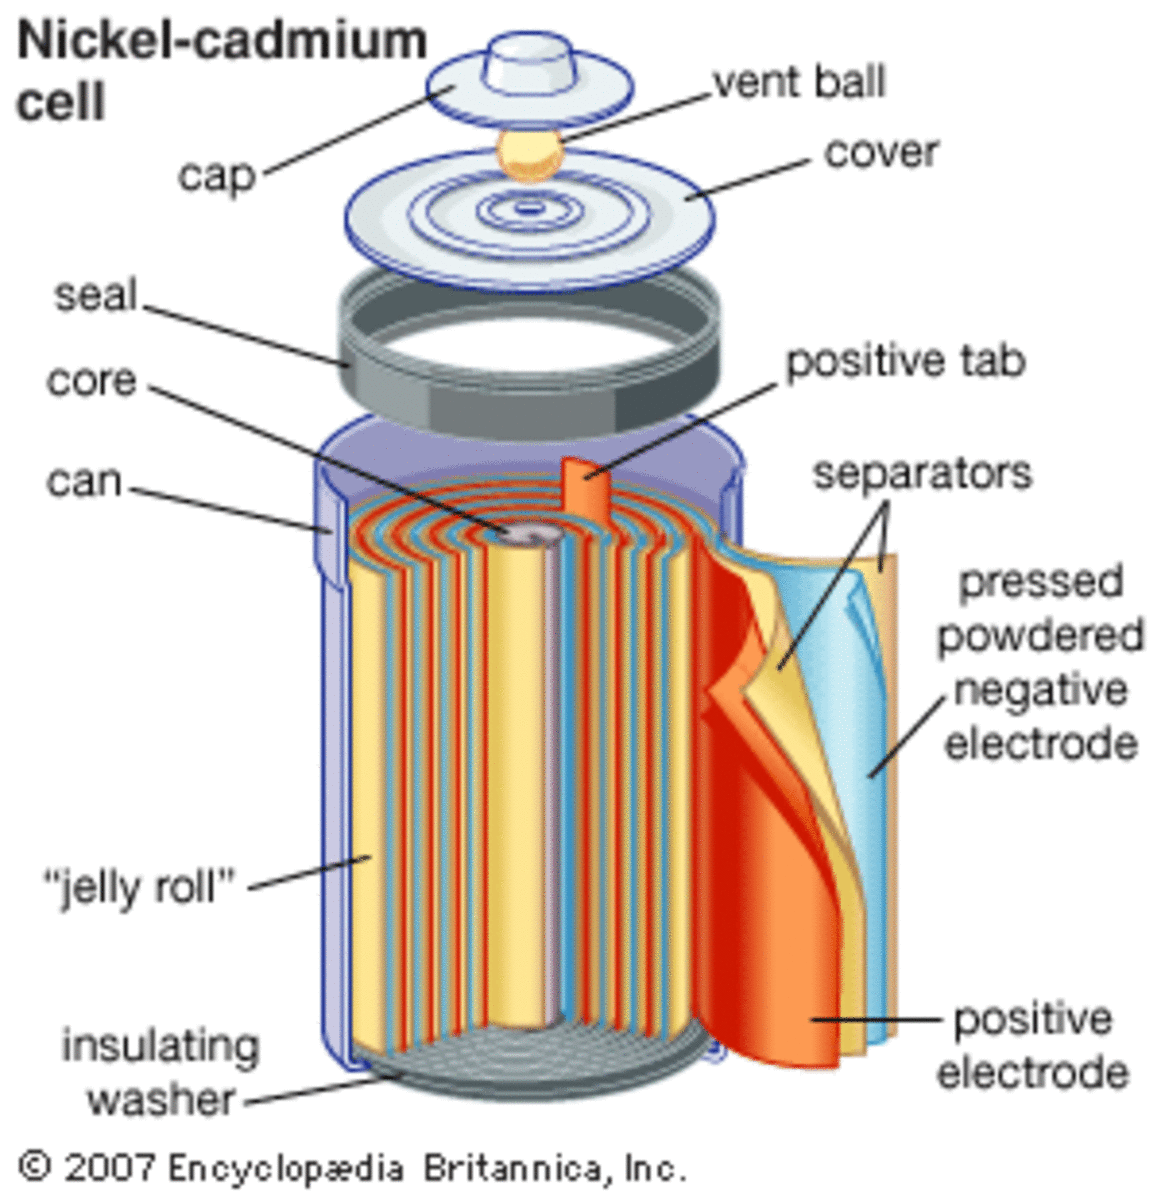 The Nickel Cadmium Battery